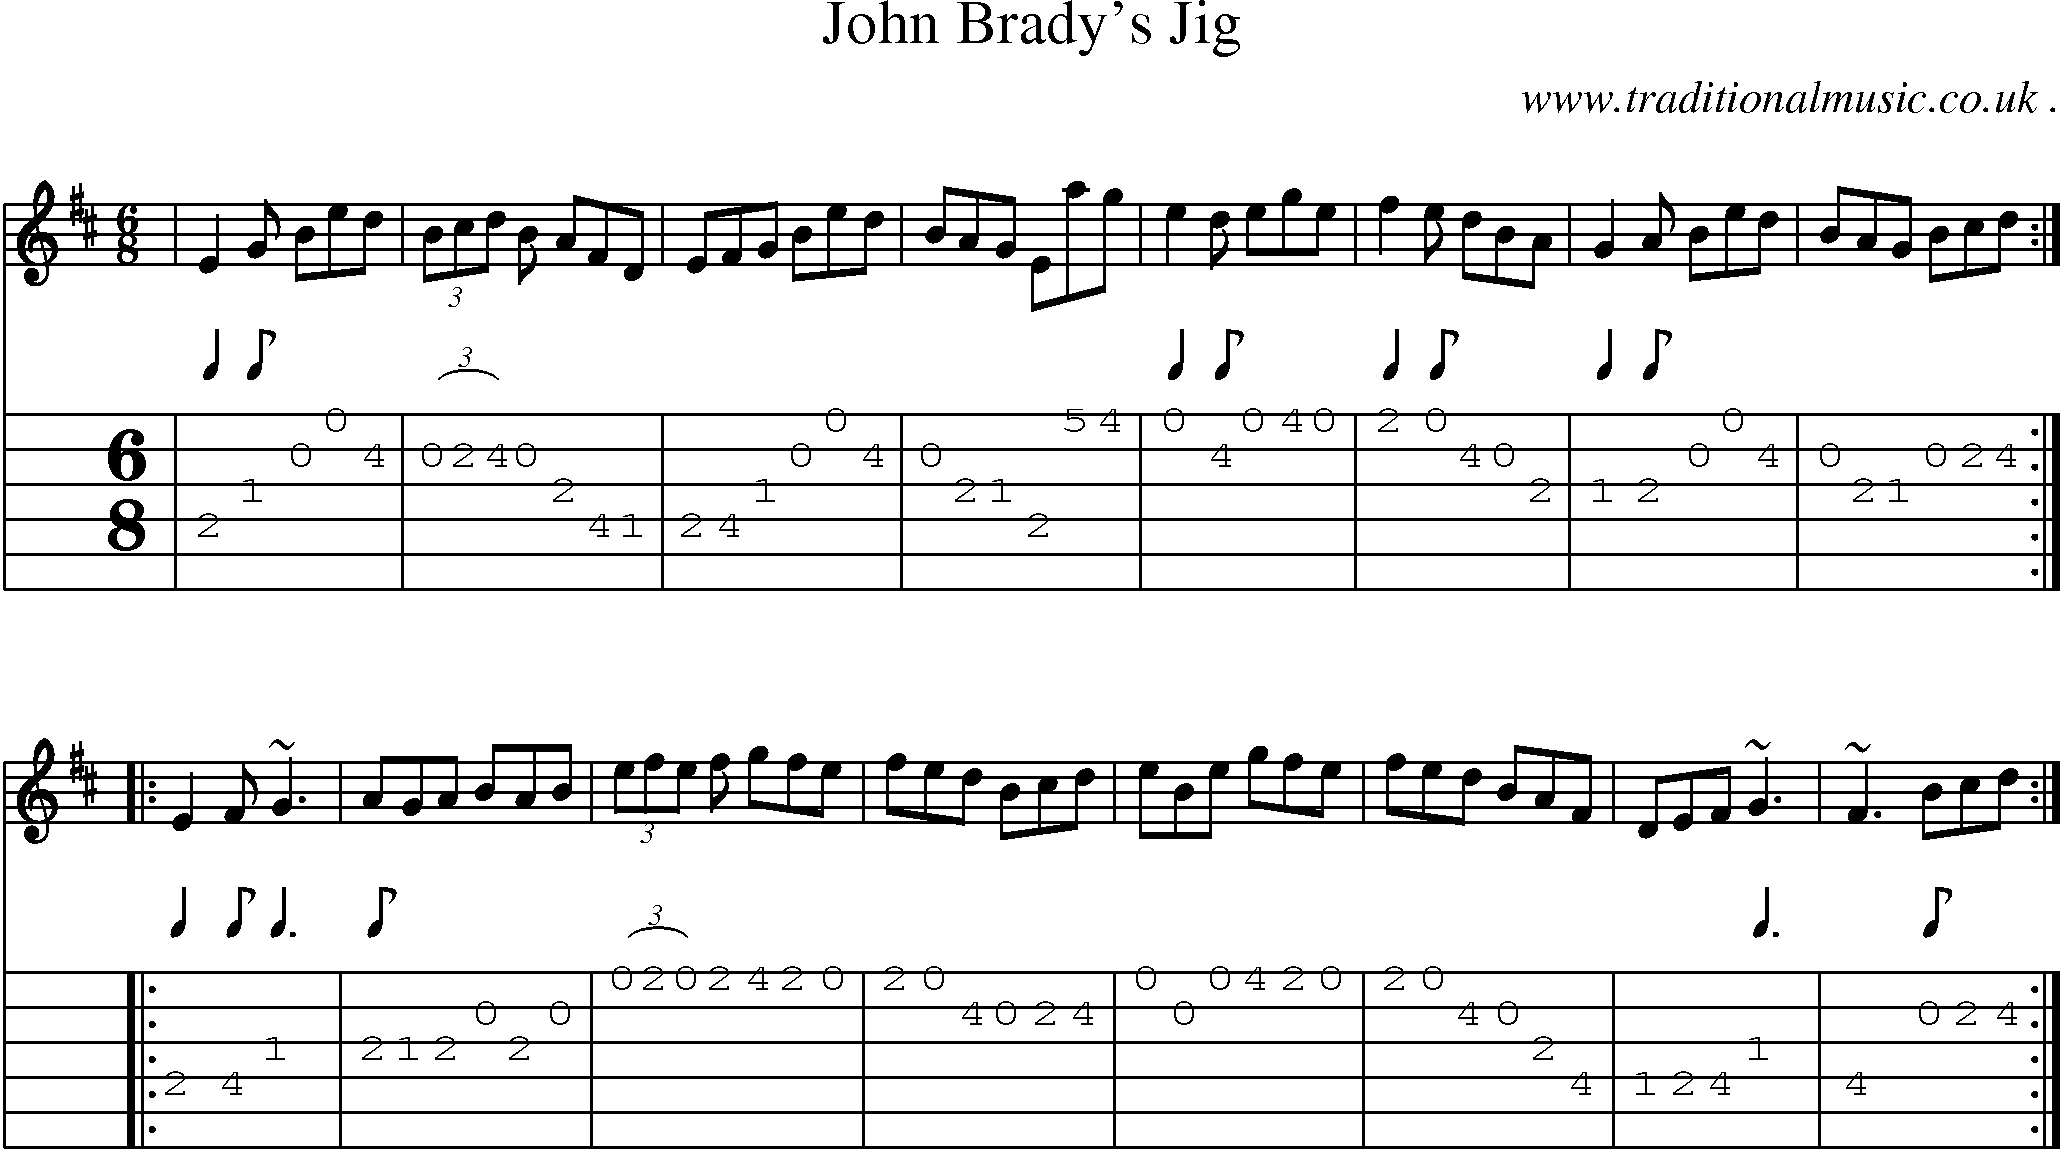 Sheet-music  score, Chords and Guitar Tabs for John Bradys Jig